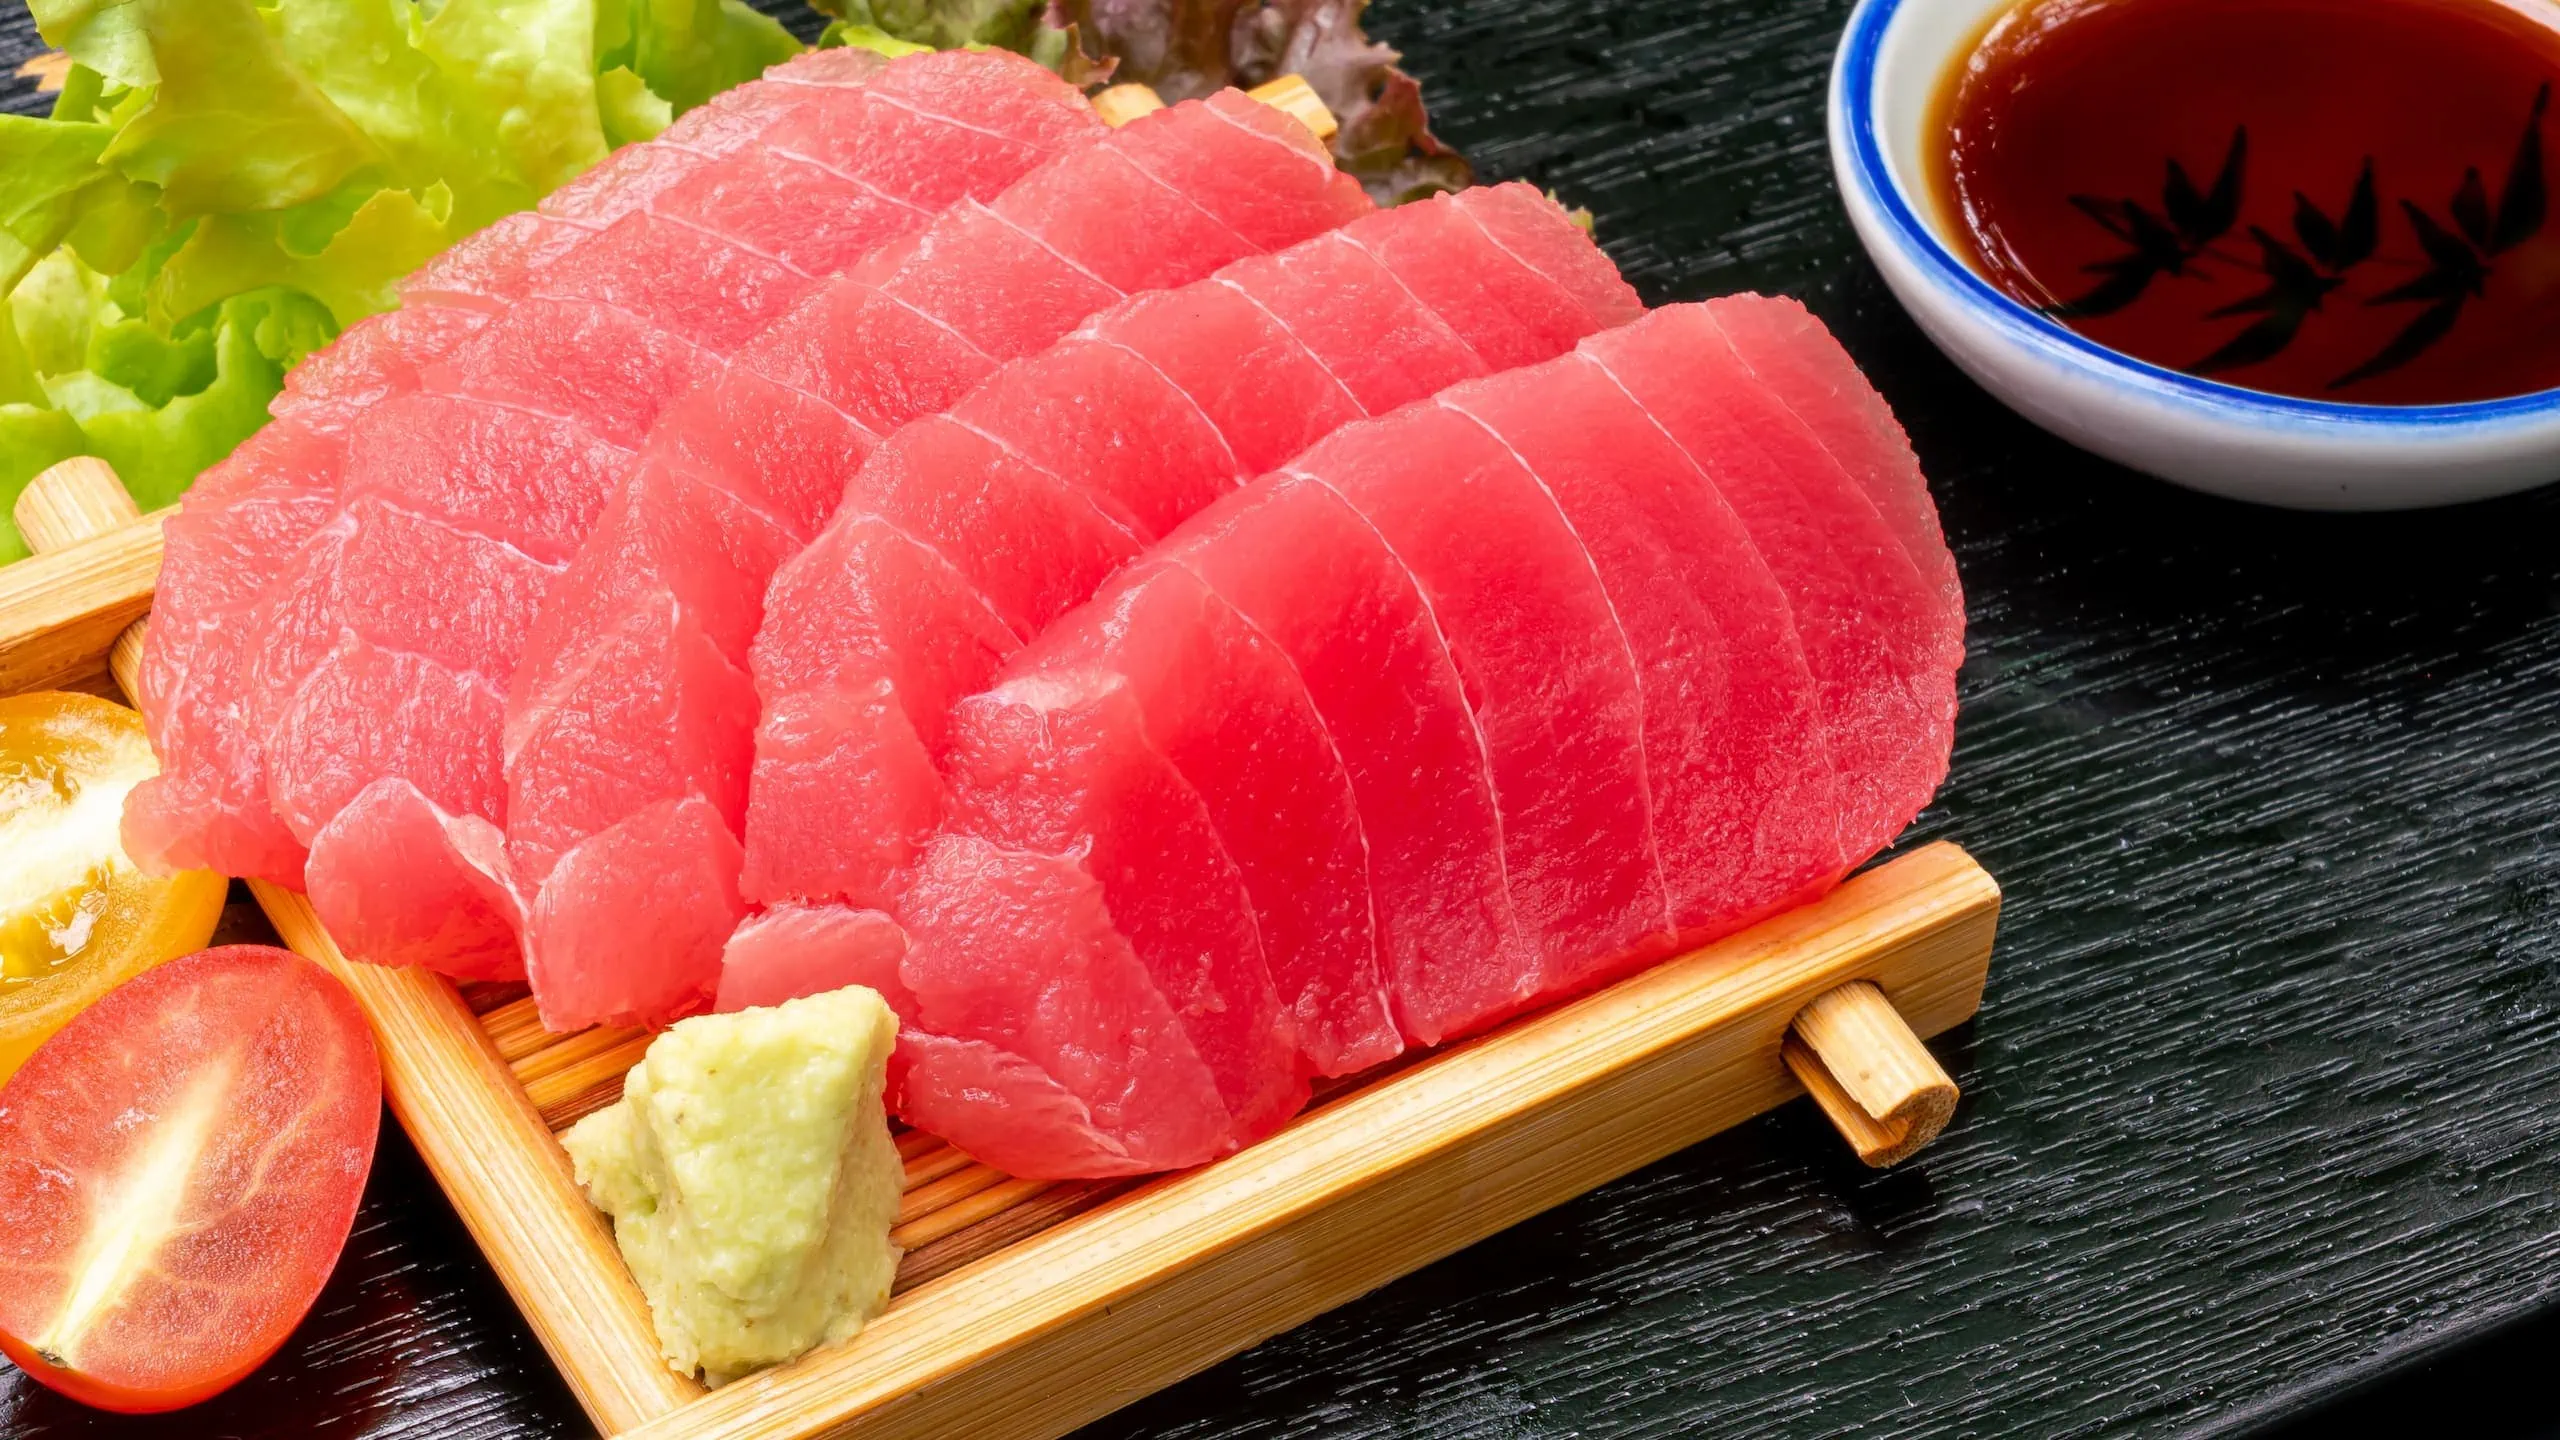 Our version recipe for sashimi tuna